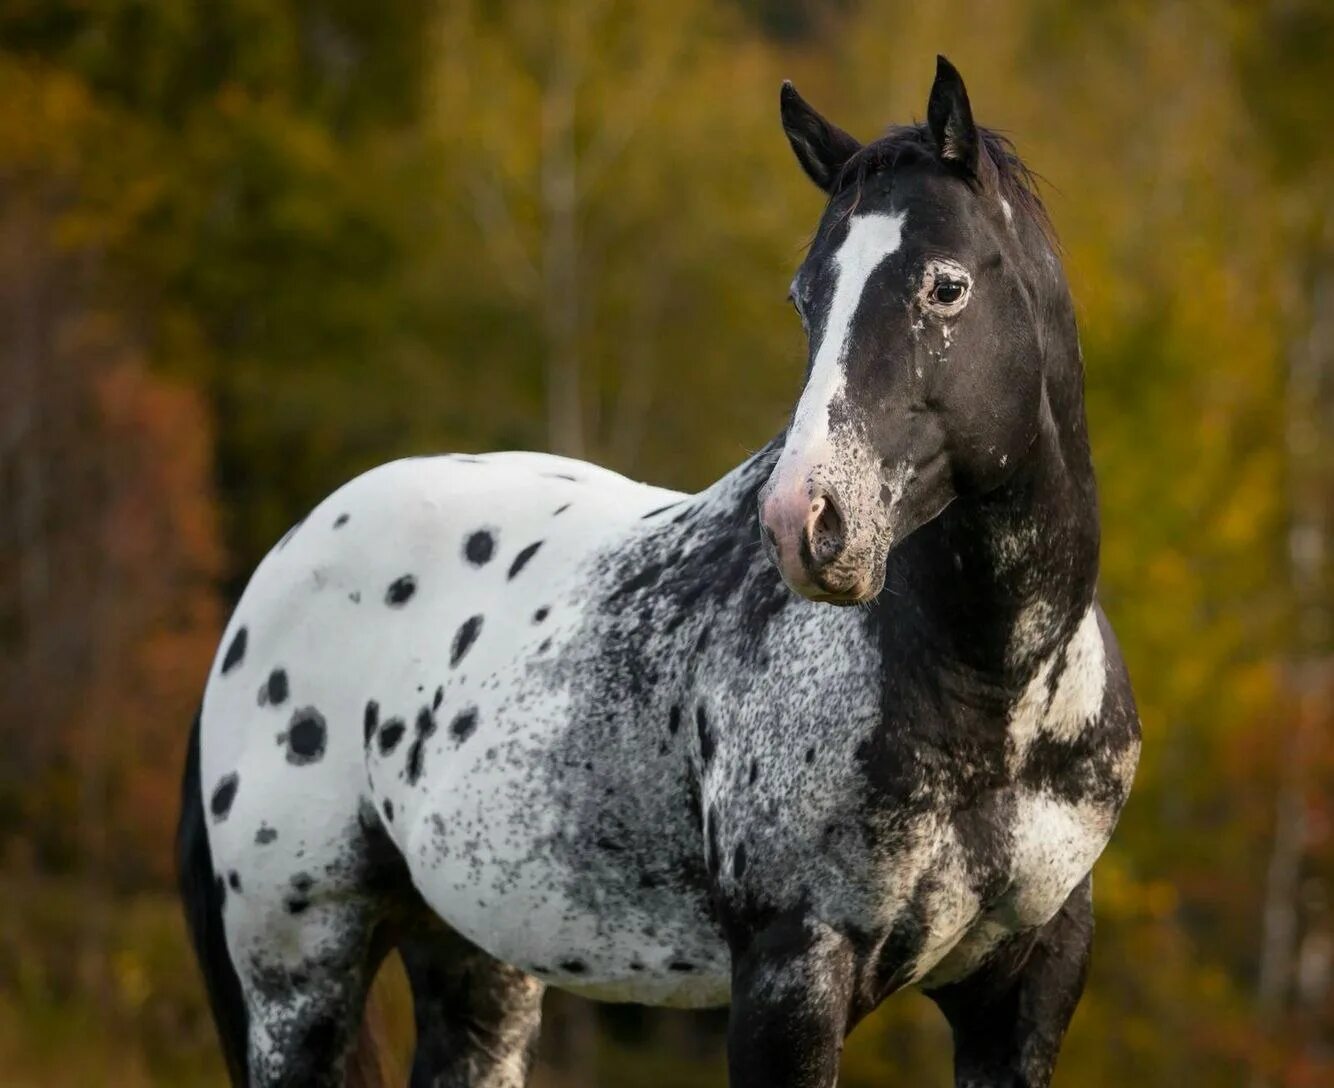 Аппалуза чубарая порода лошадей. Пегая Аппалуза. Чубарая лошадь Аппалуза. Конь породы Аппалуза. Вороной окрас лошади